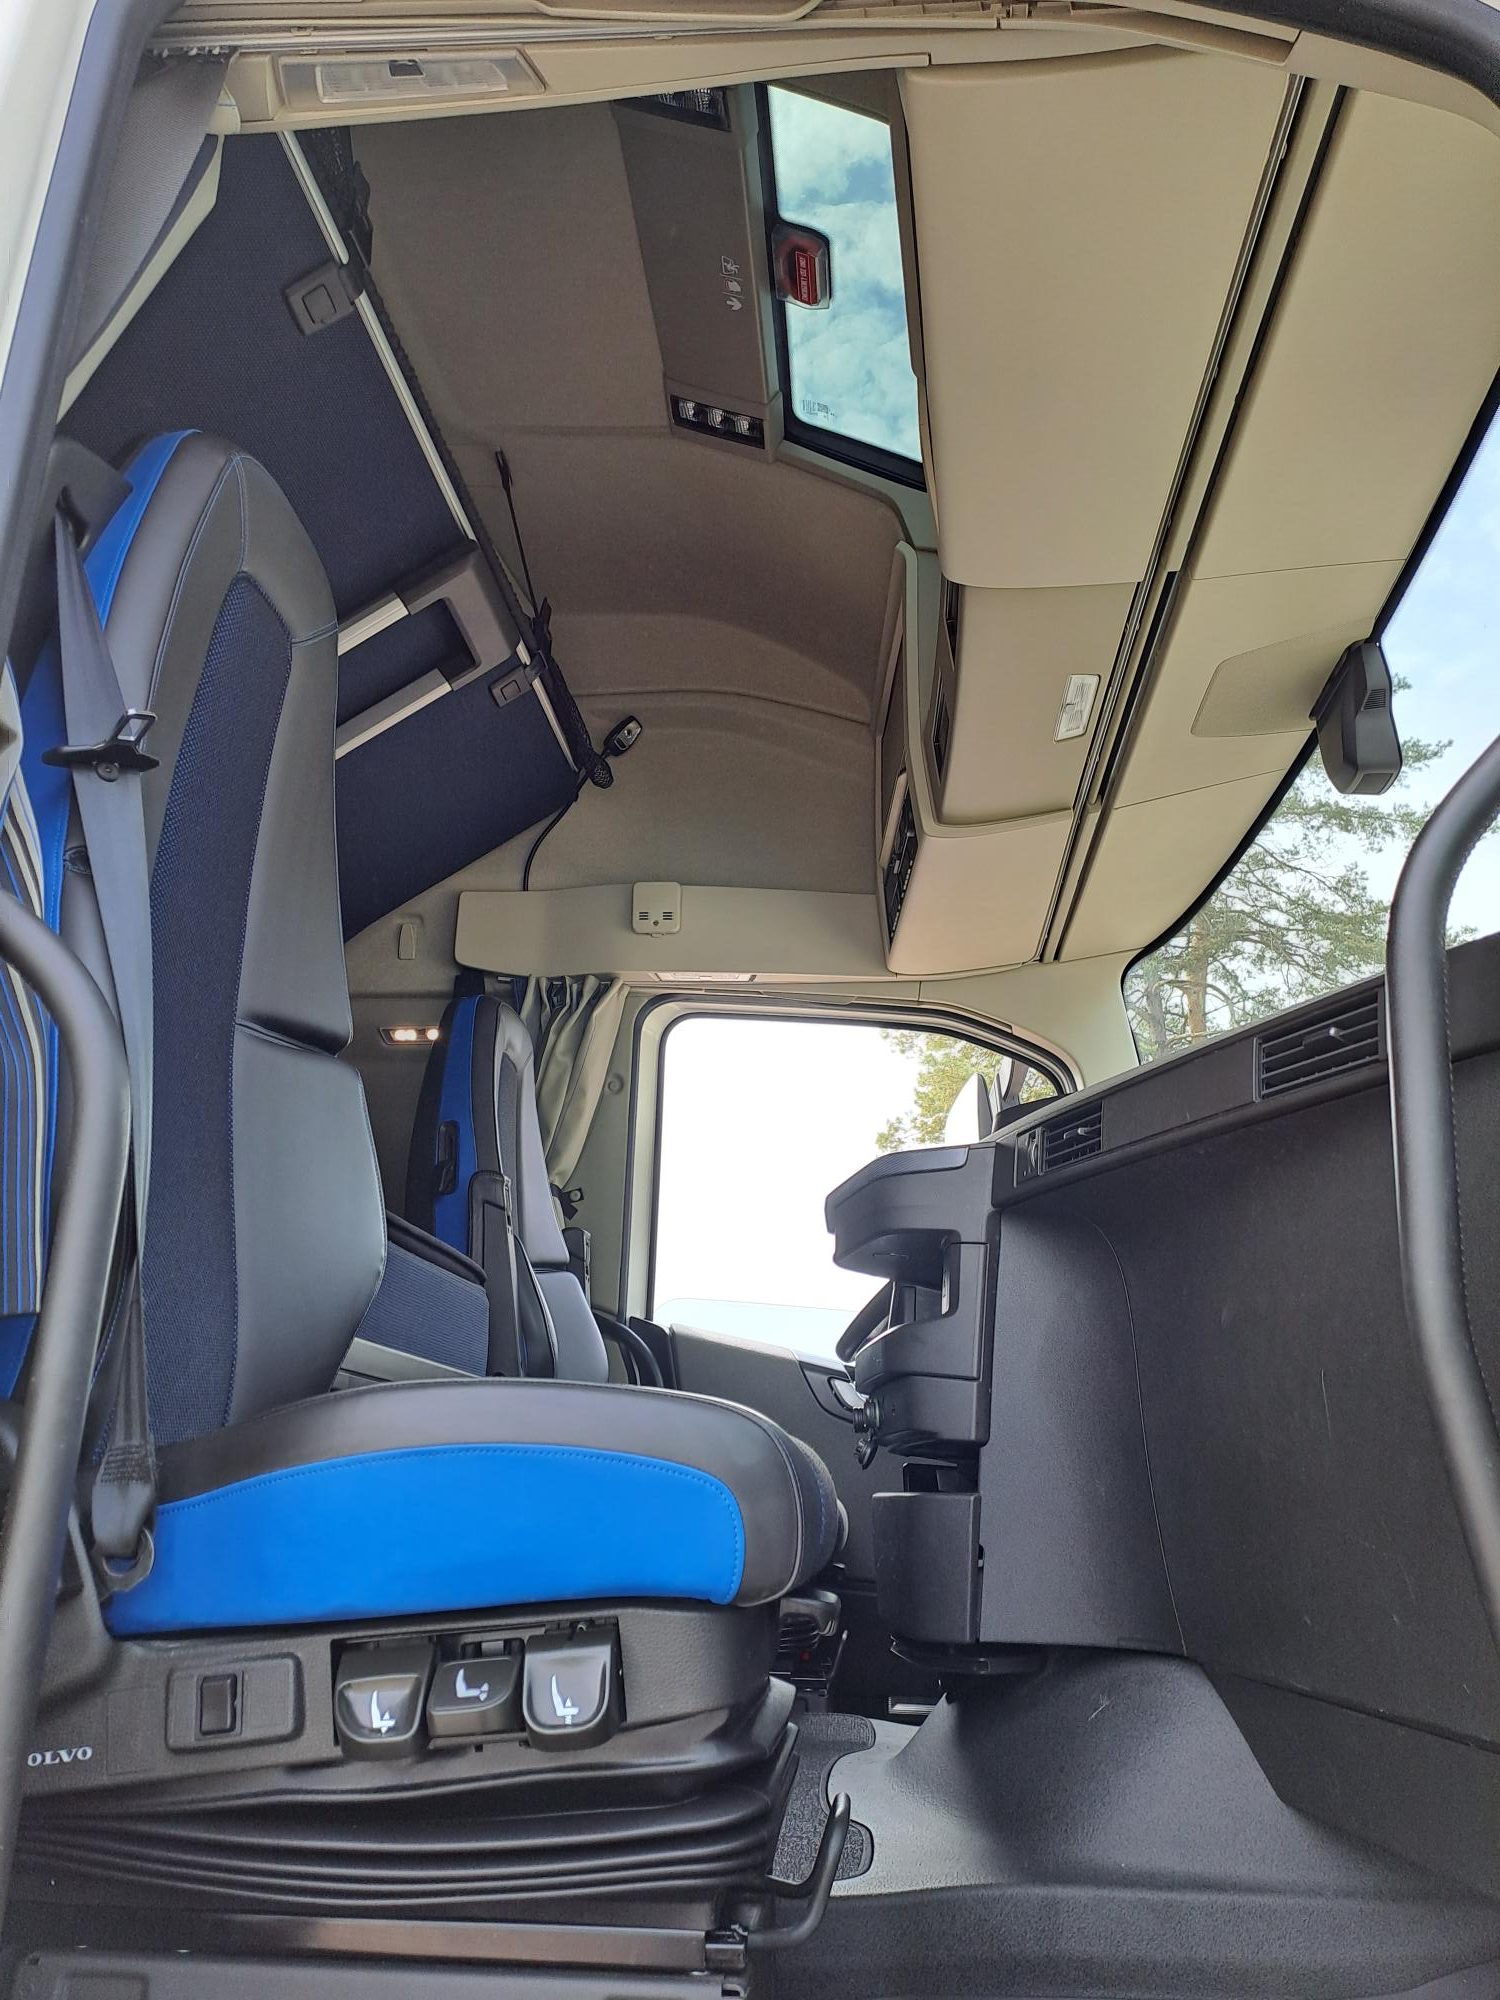 New 2021 Volvo FMX truck - INTERIOR 